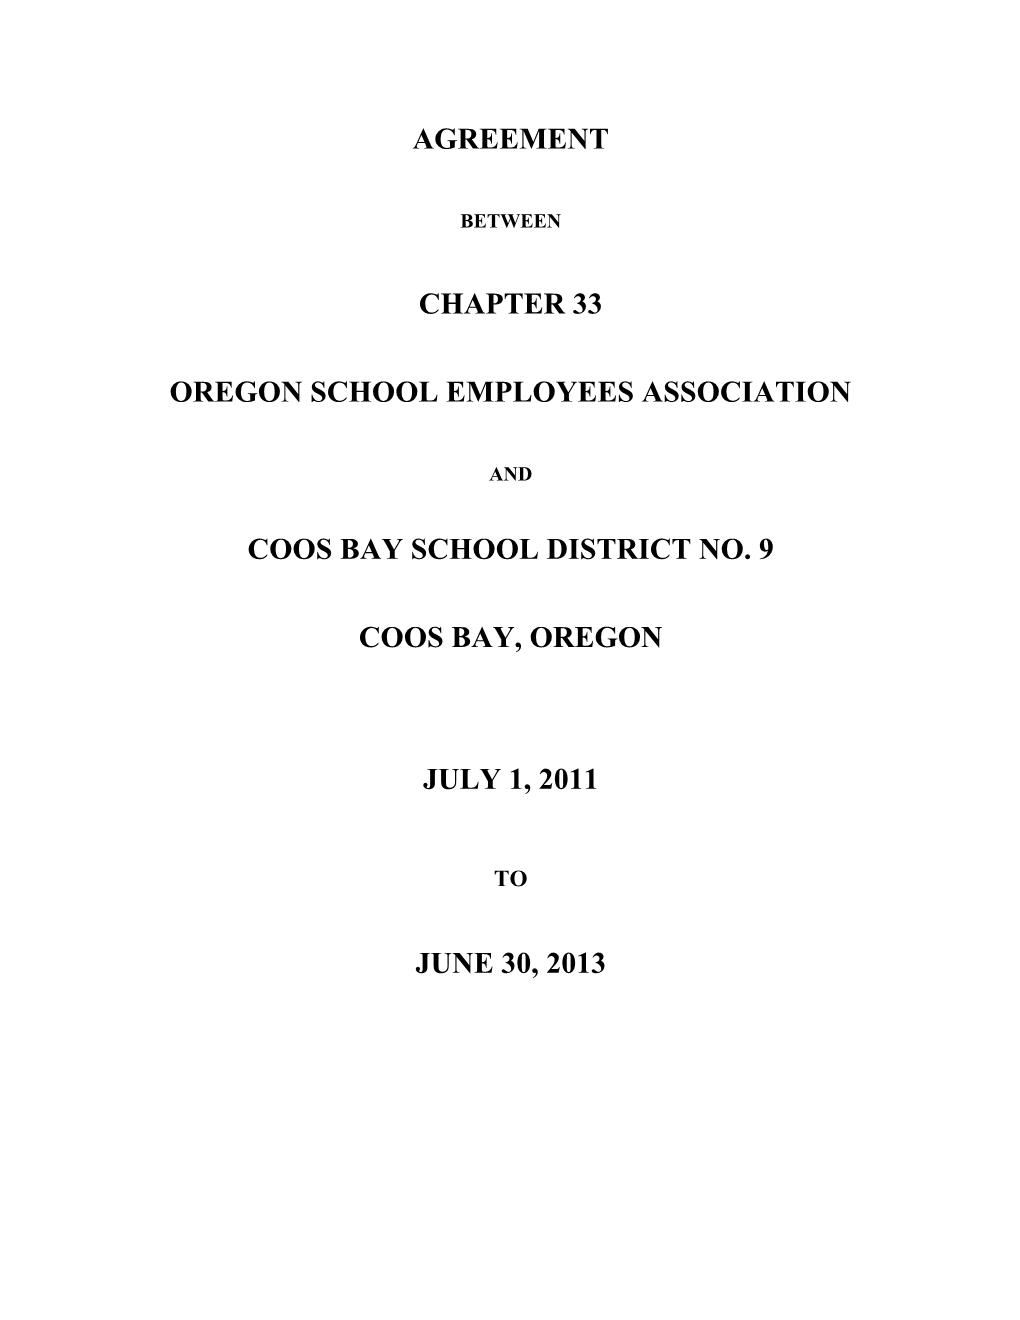 Oregon School Employees Association